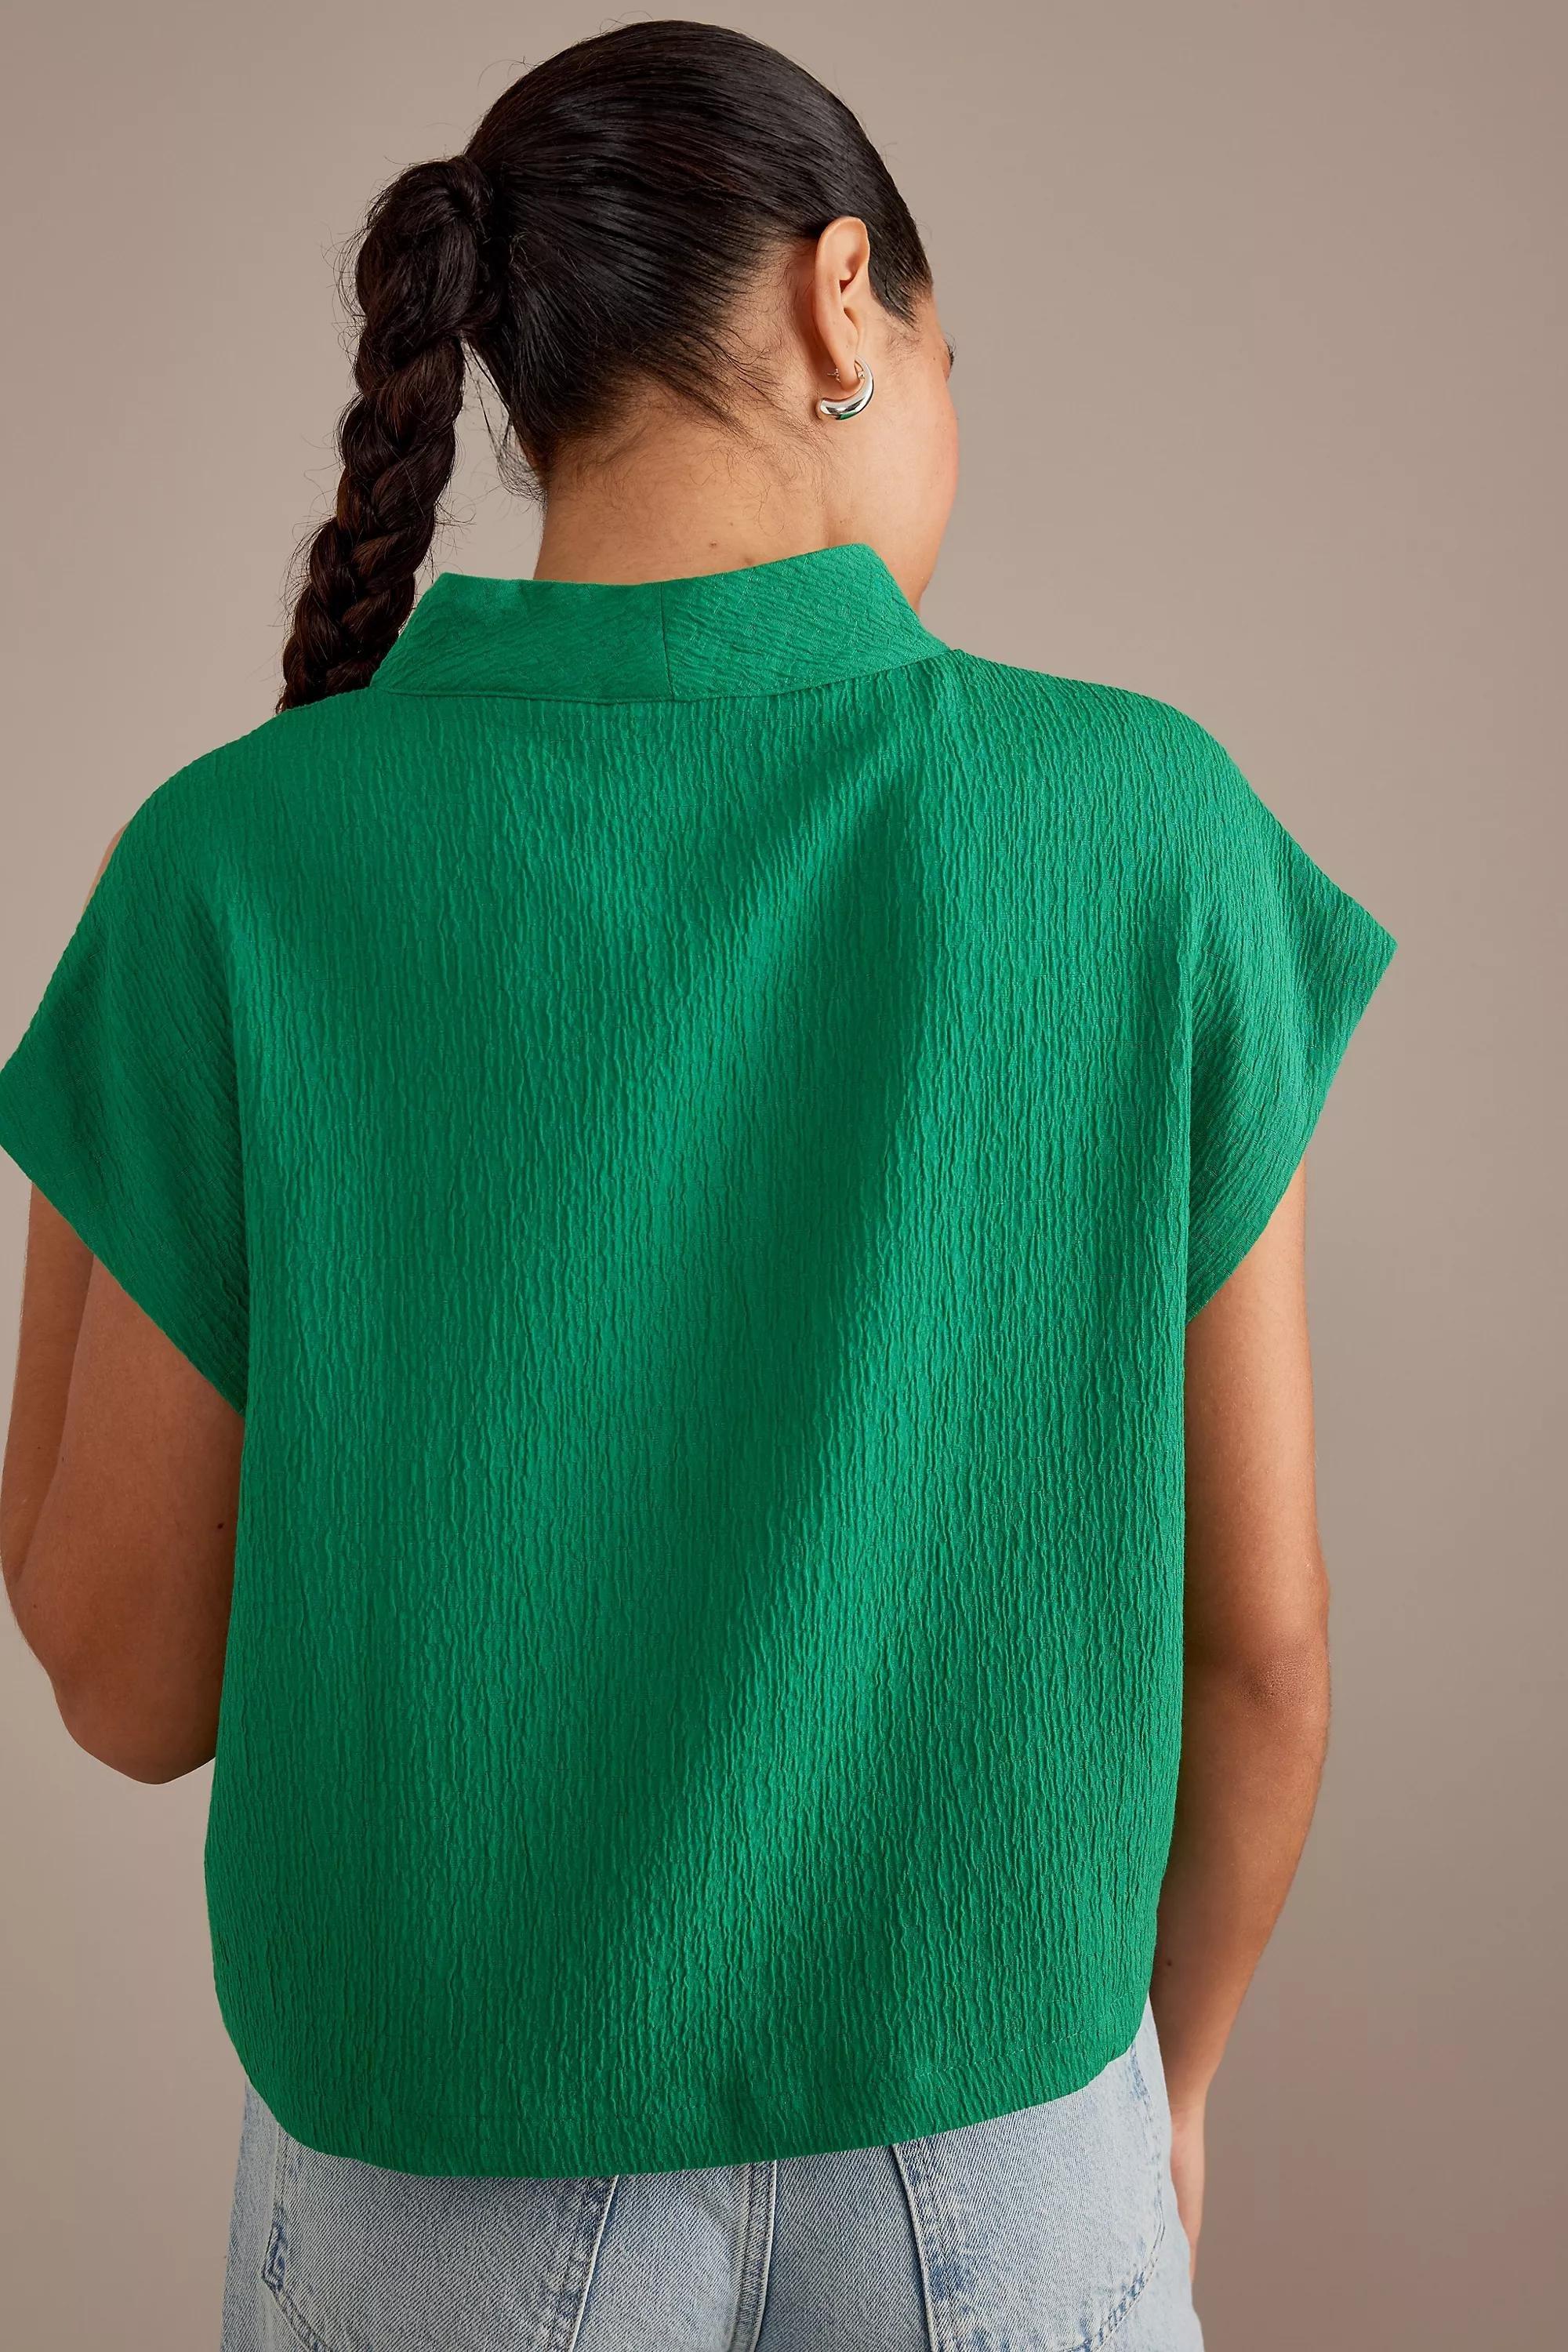 Anthropologie - Maeve Textured Cap-Sleeve Blouse, Green